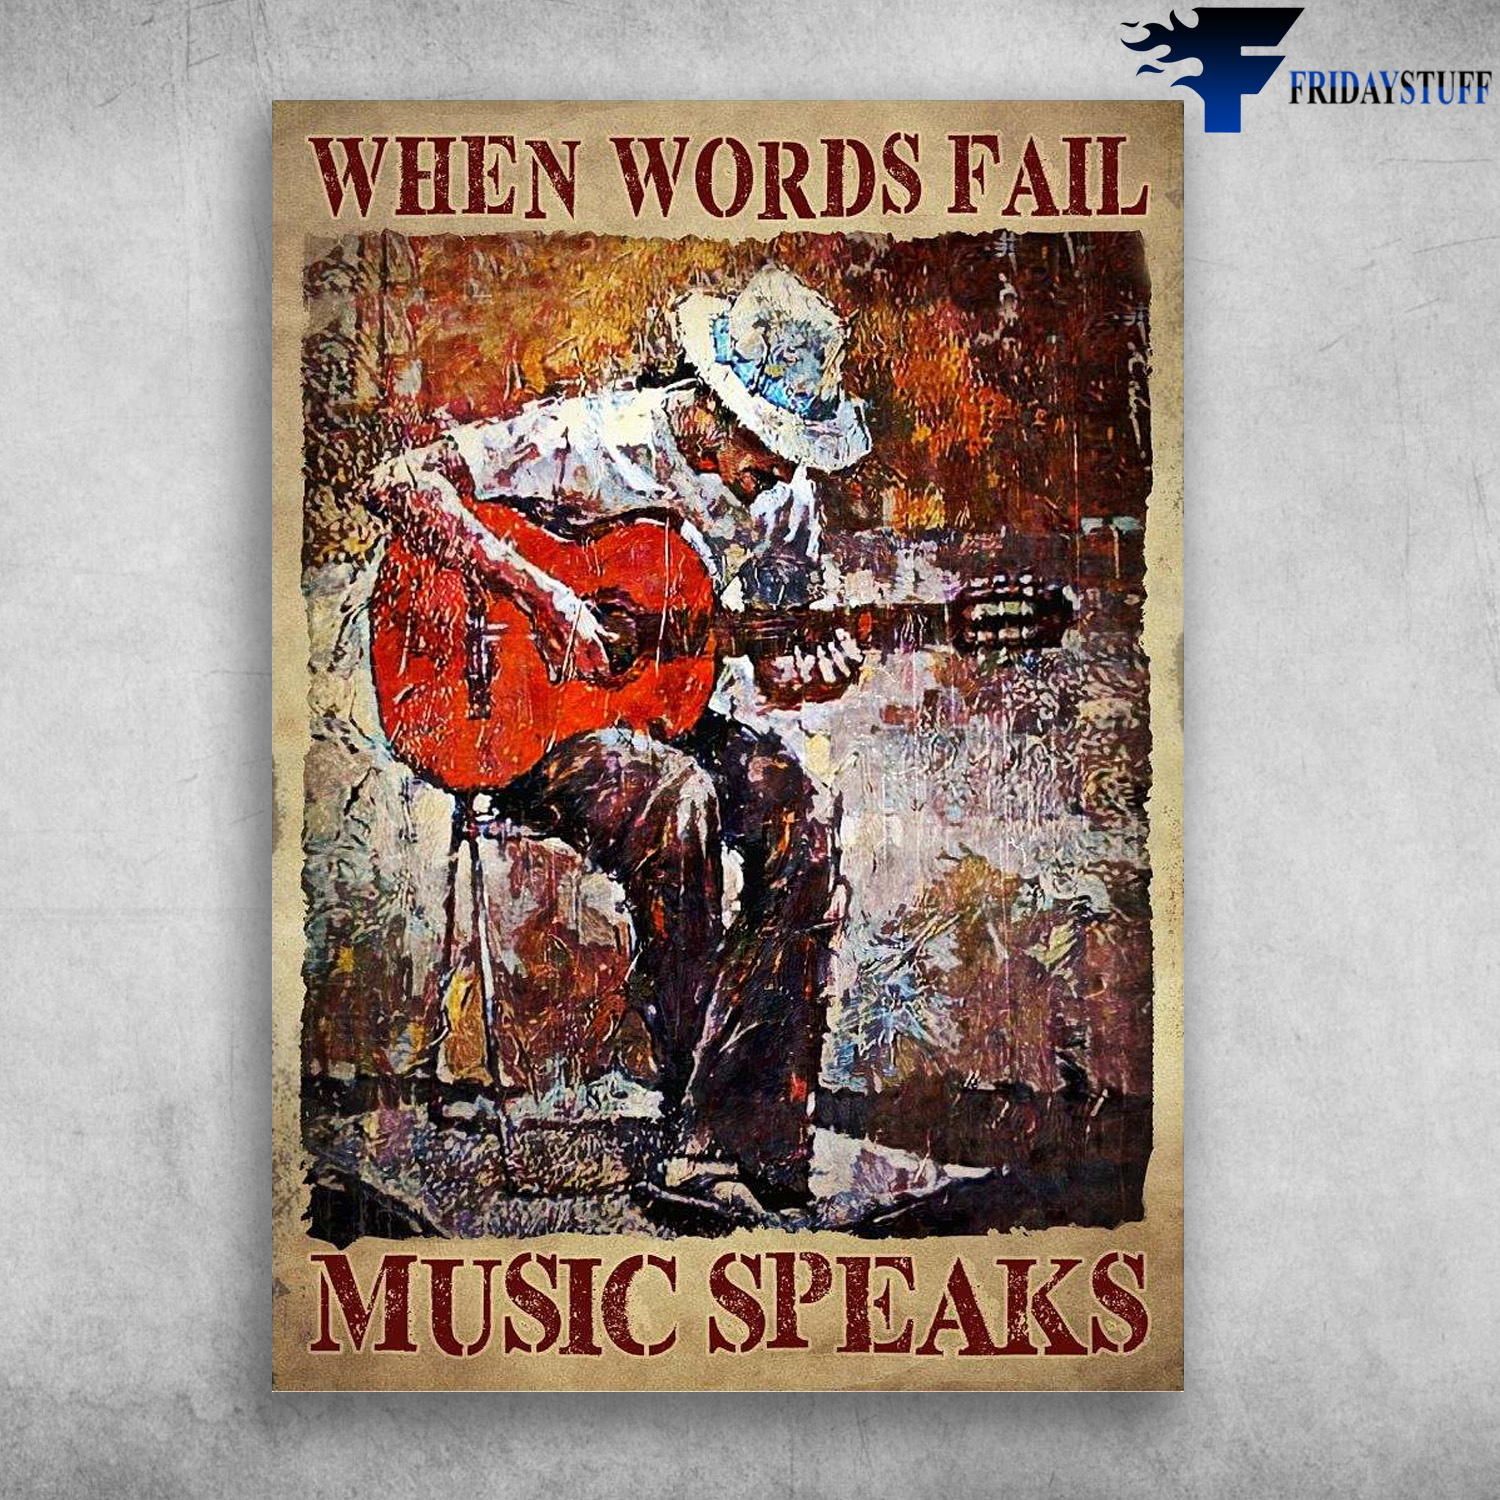 Guitar Man - When Words Fall, Music Speaks